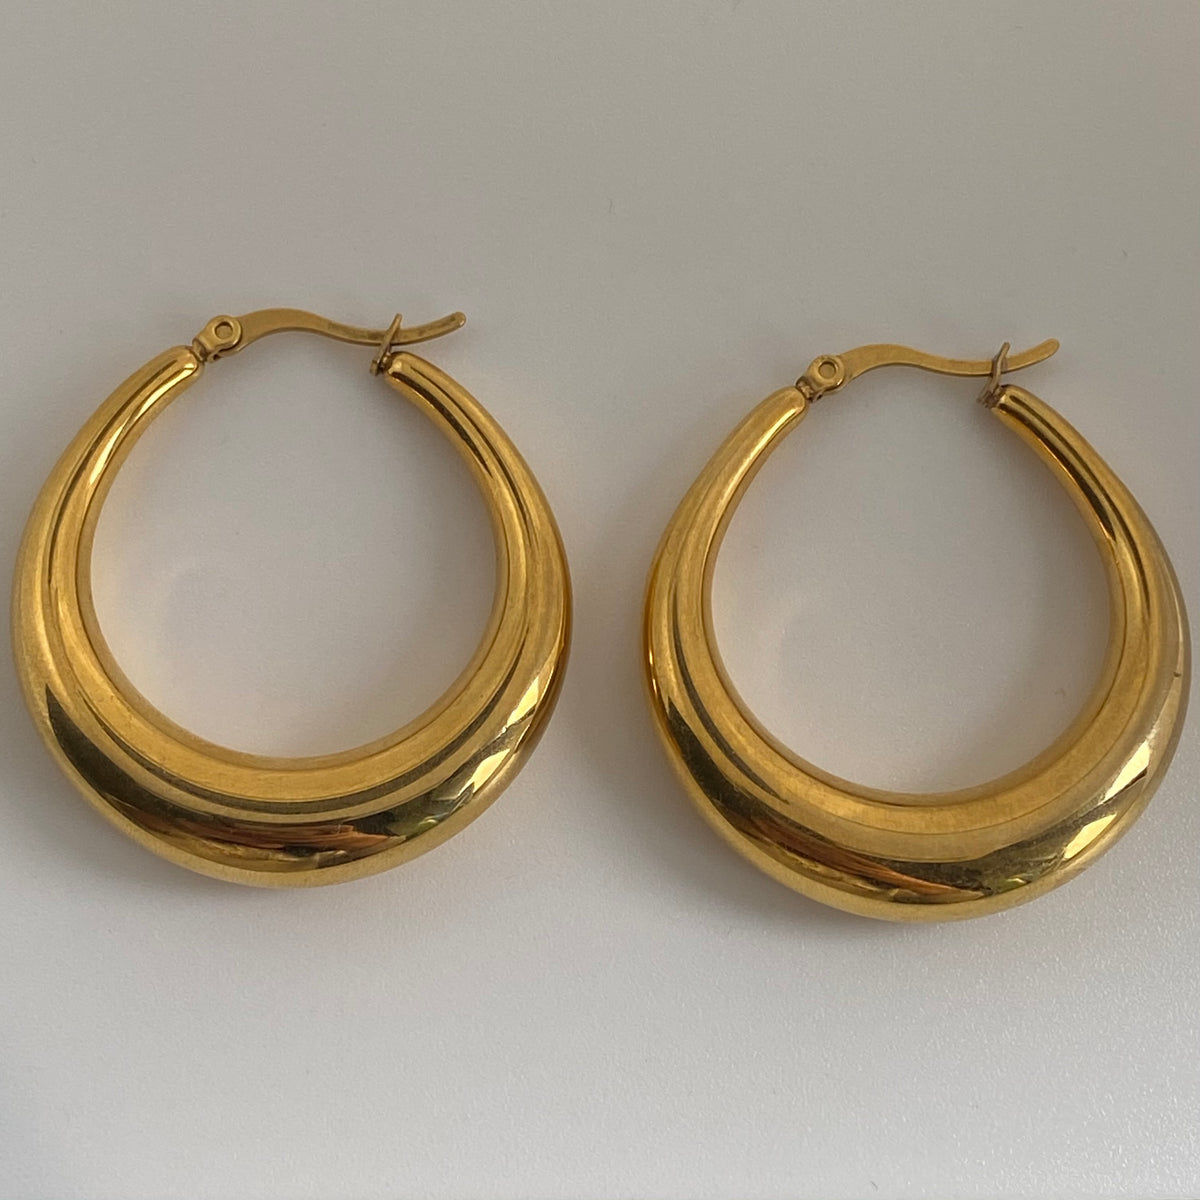 GOLD HOOP EARRINGS – After Hours Jewellery